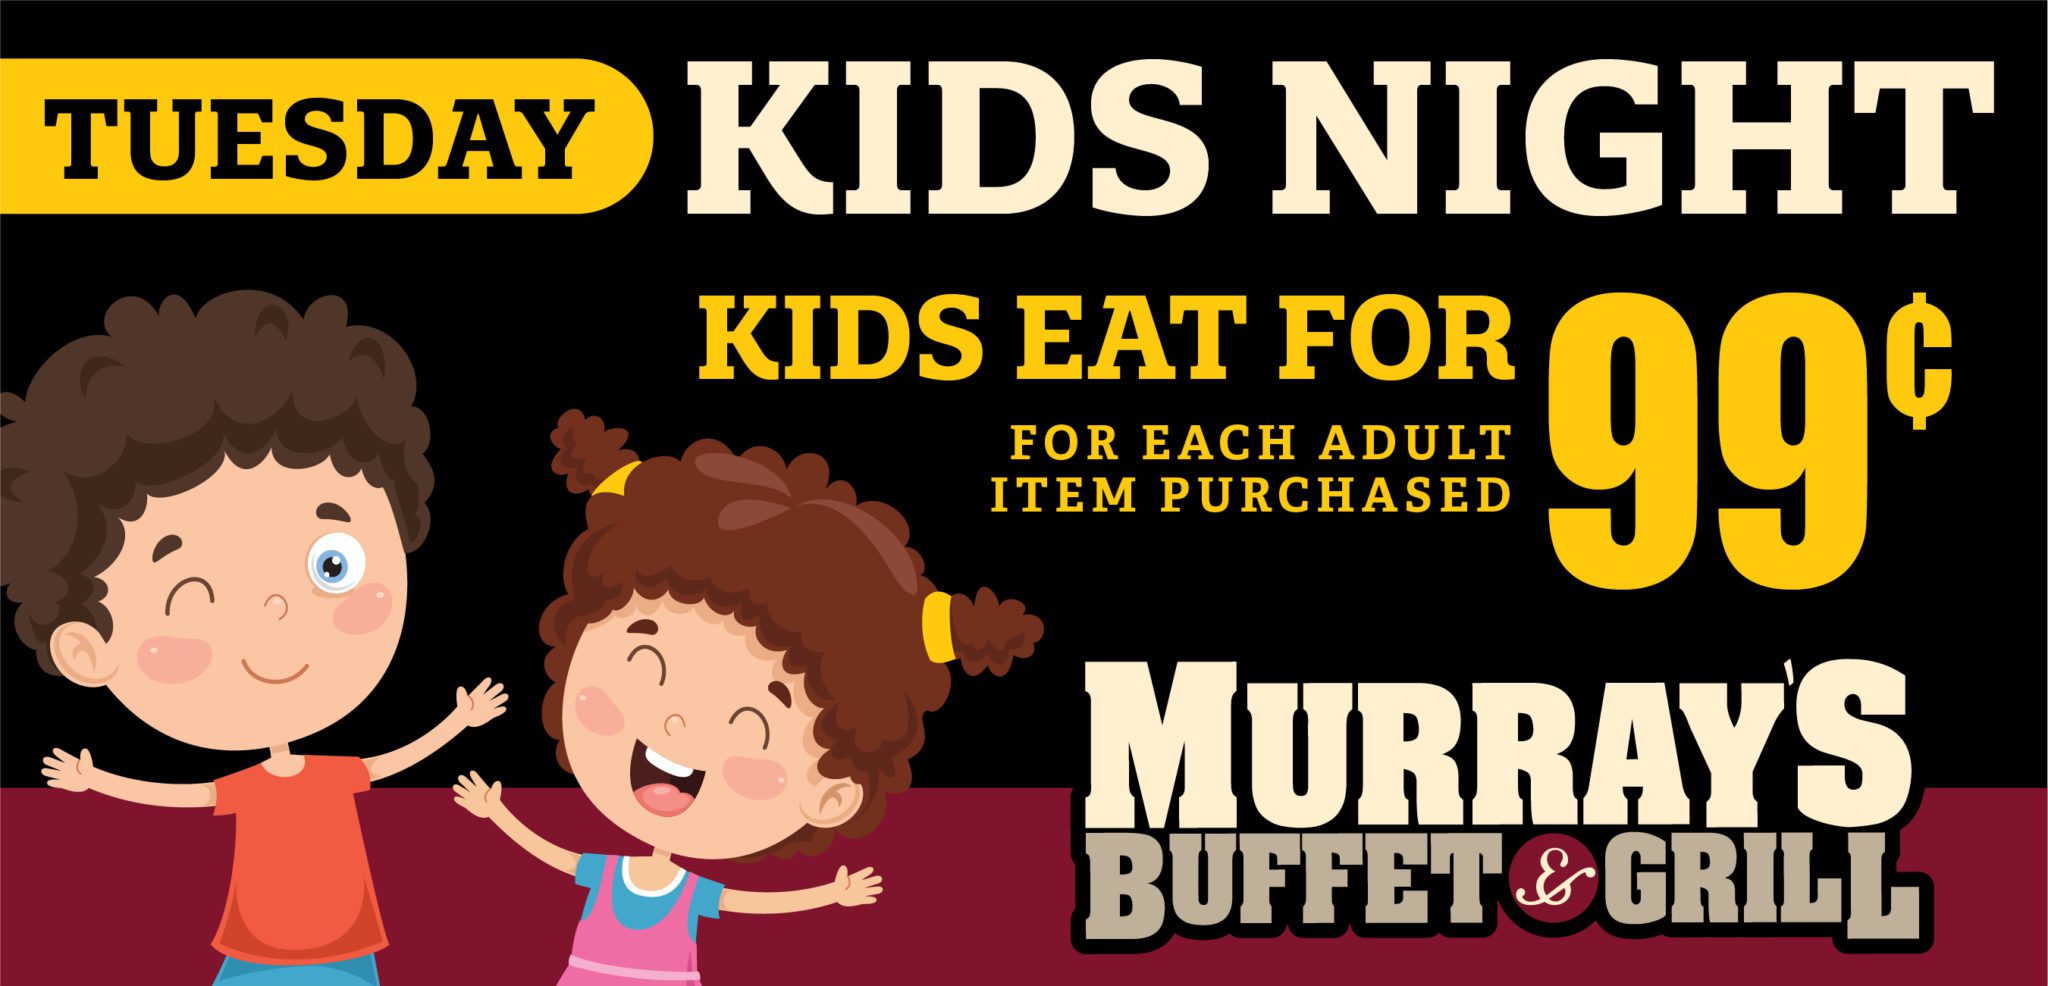 Digital billboard ad for Murray's Buffet & Grill